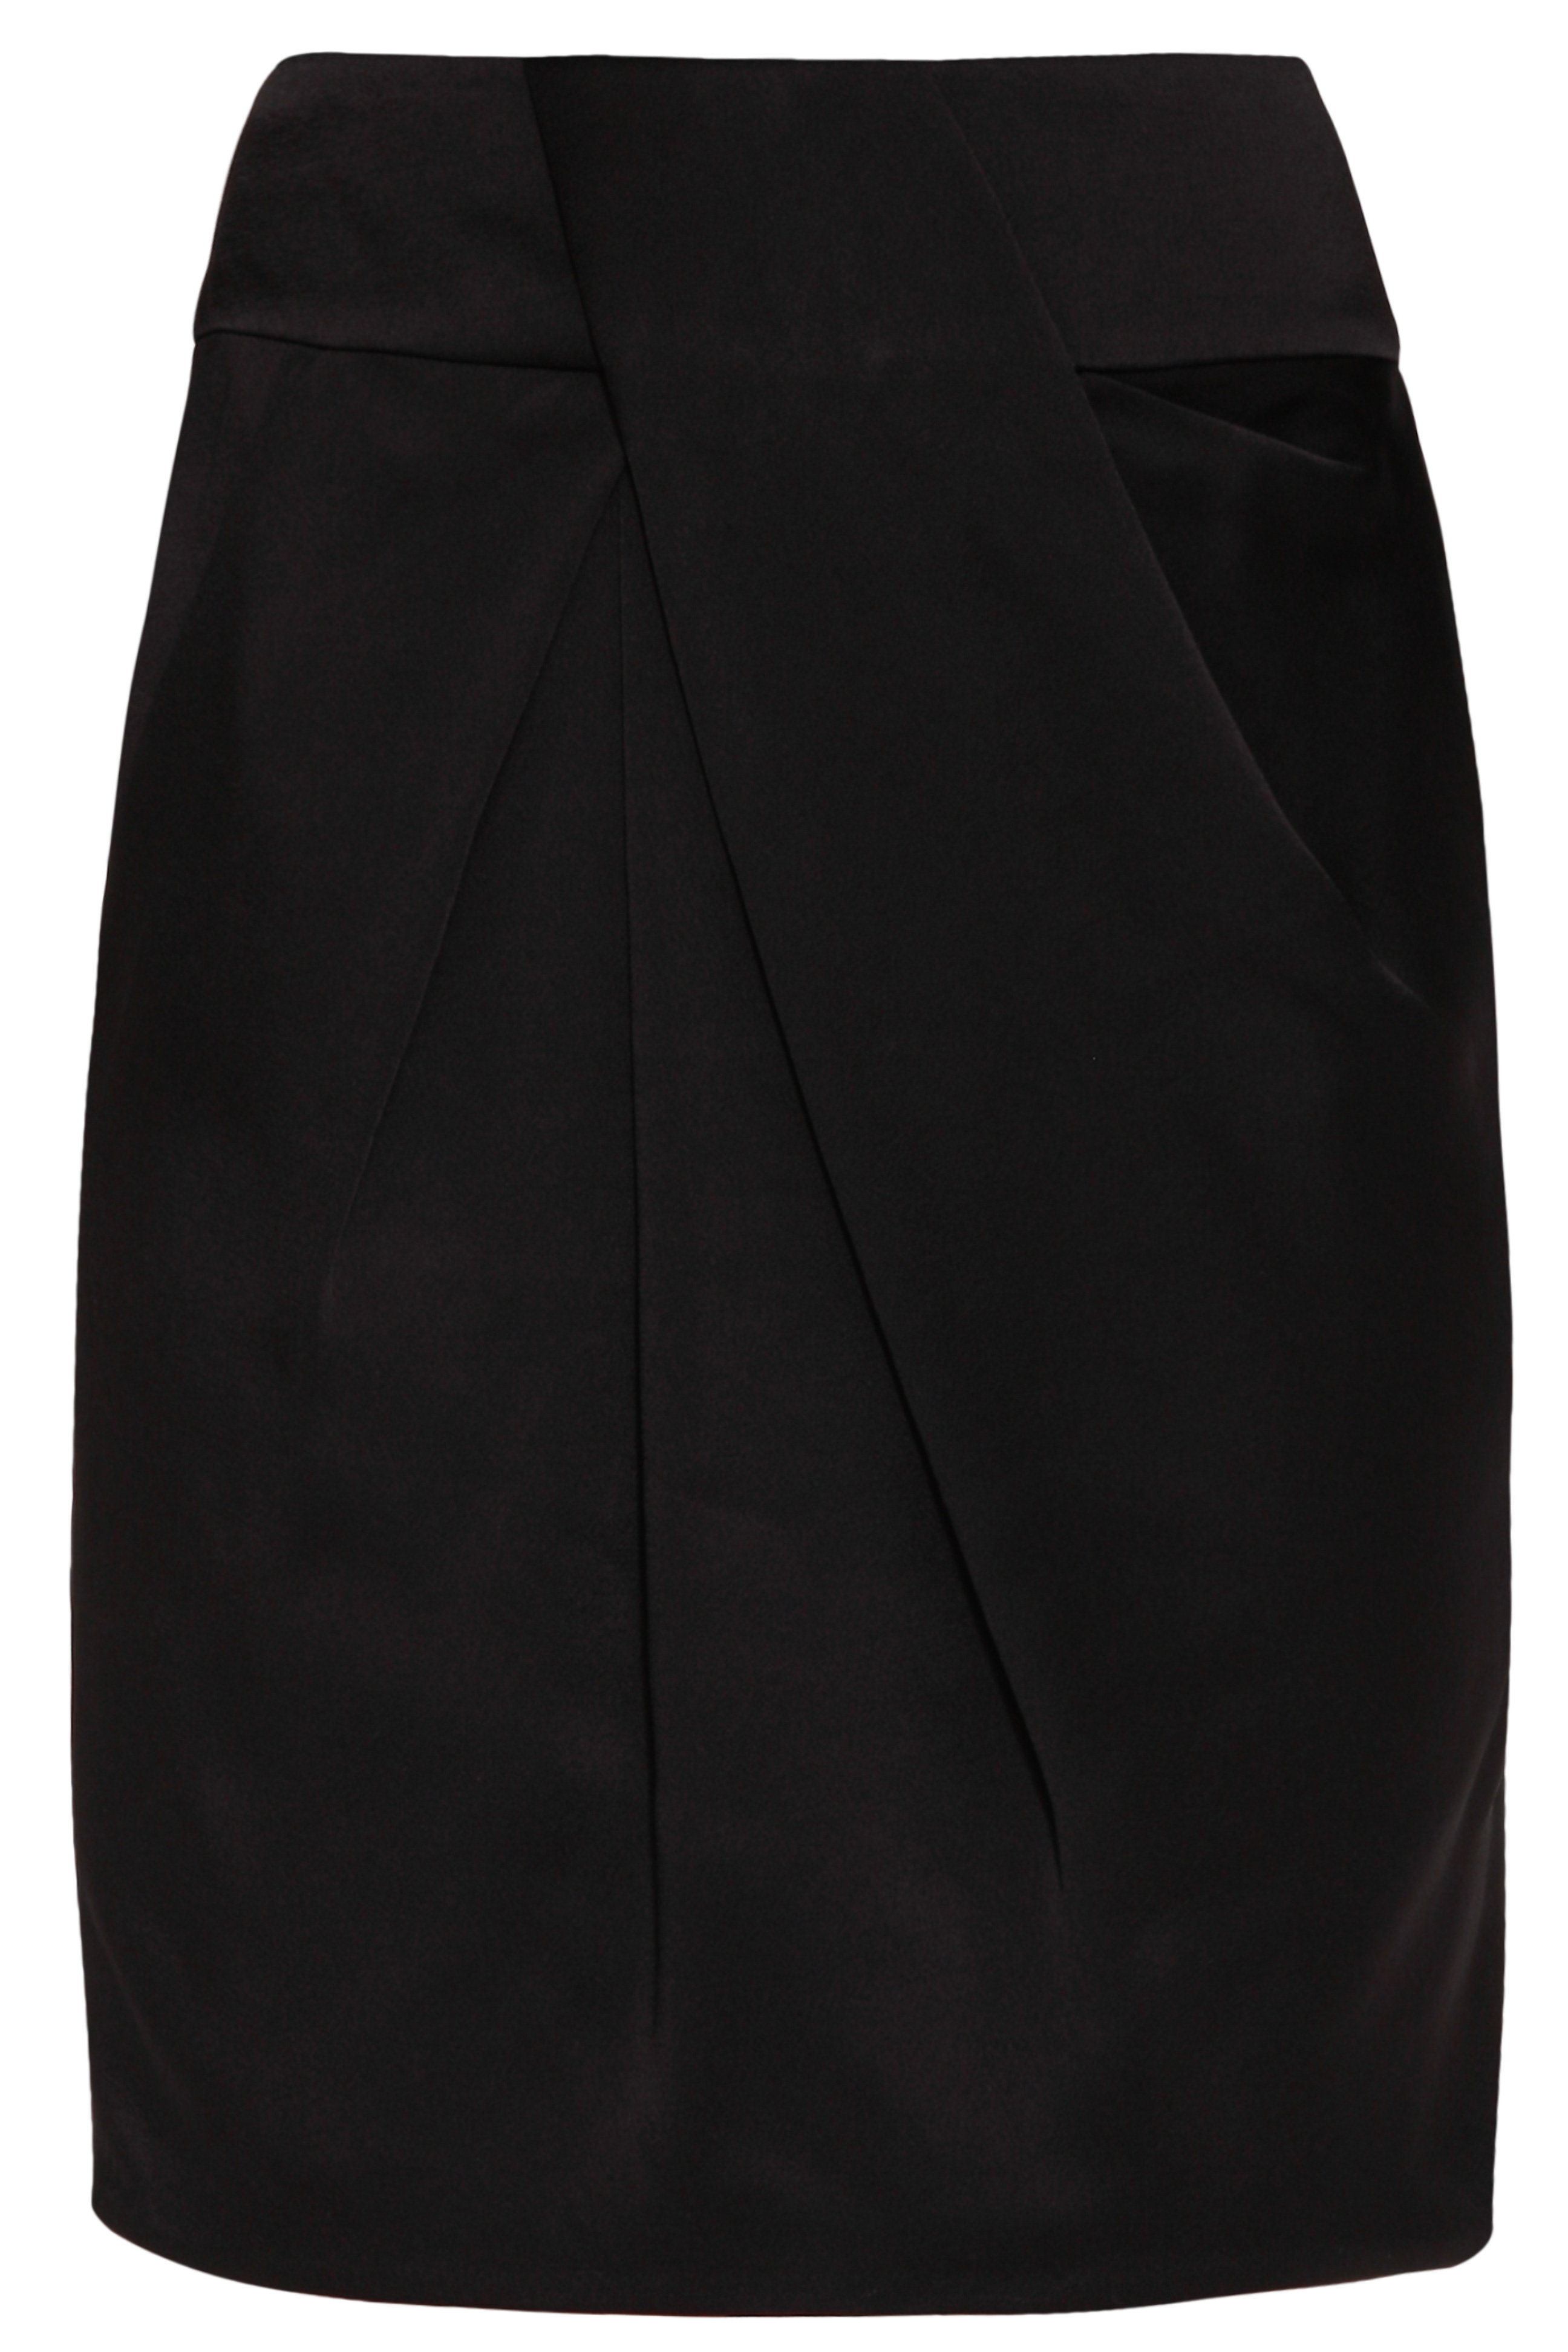 Alexander Wang Sateen Drape Skirt in Black | Lyst